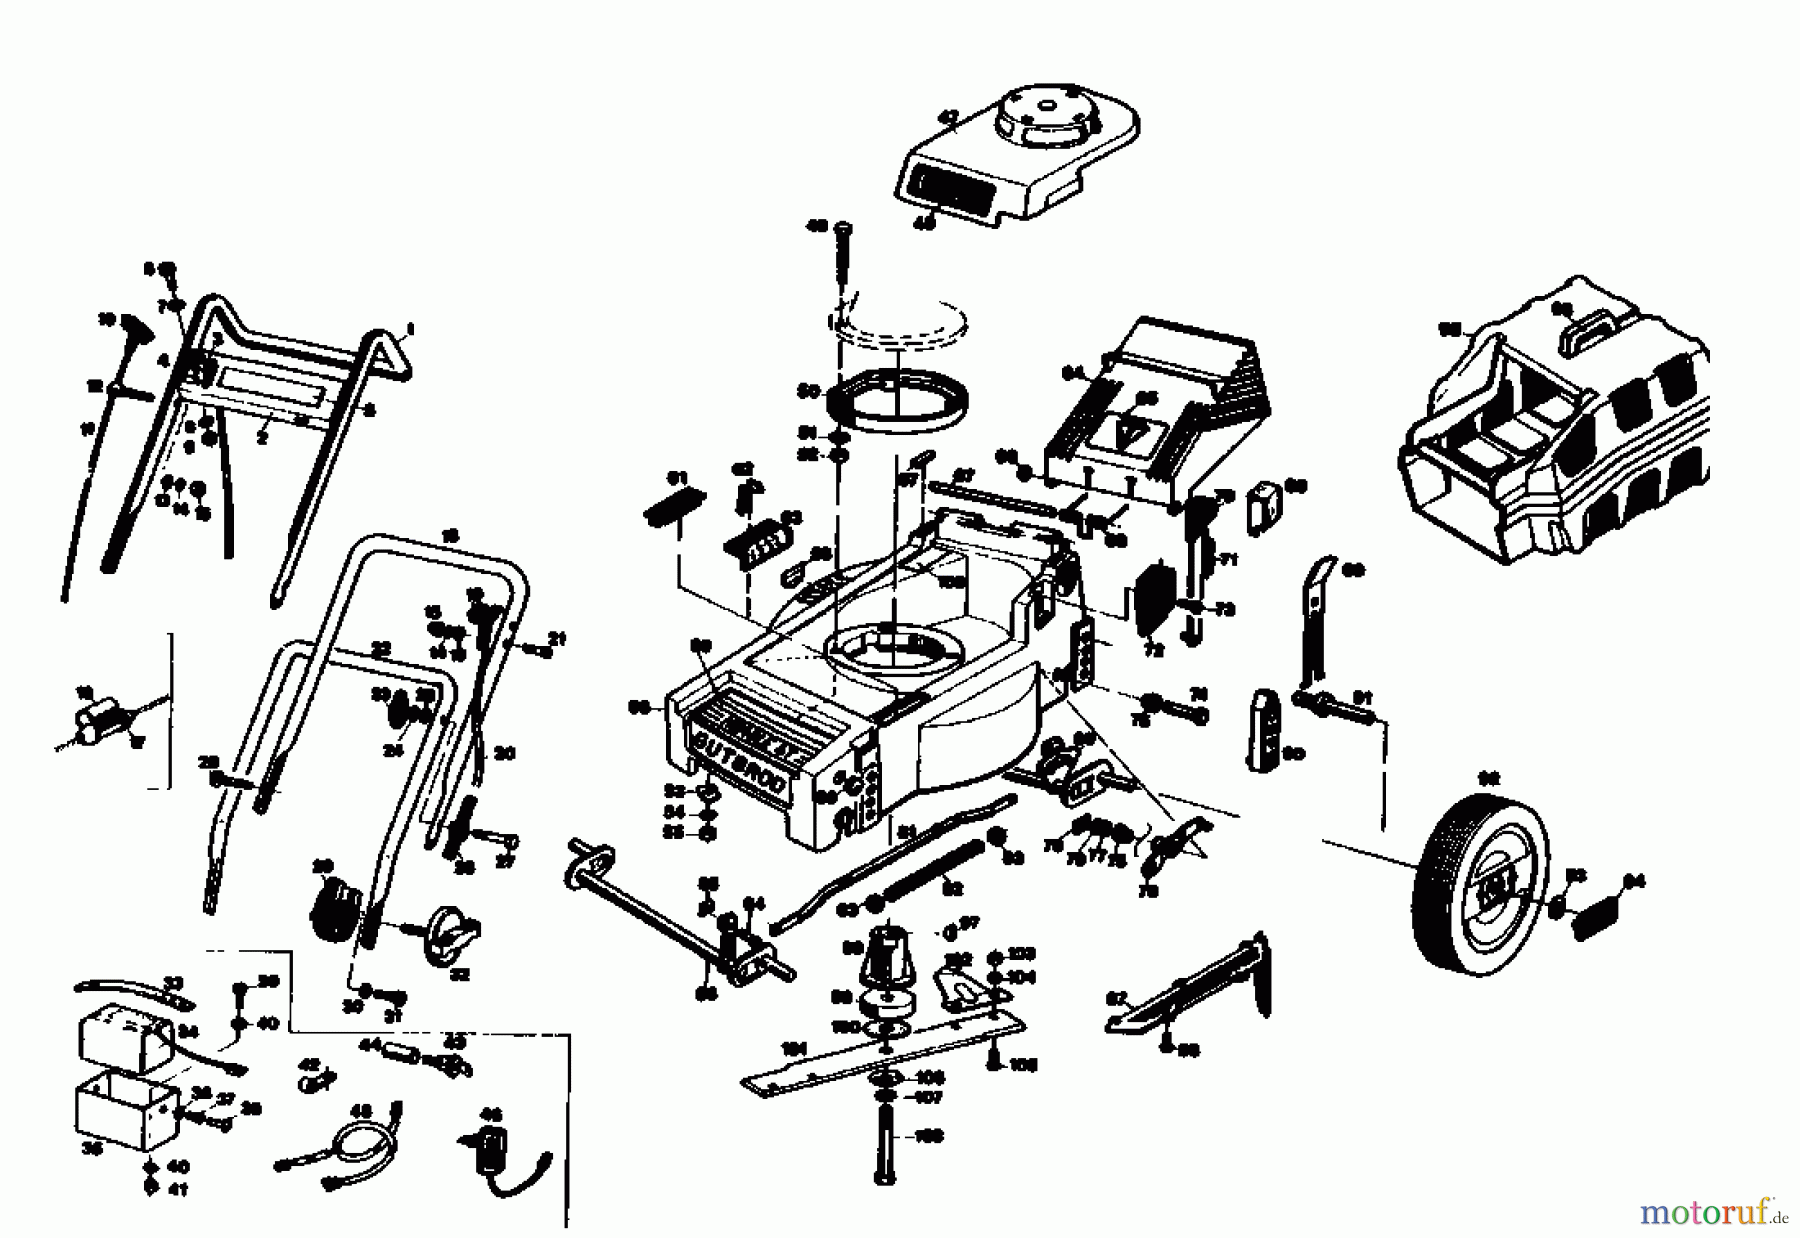  Gutbrod Petrol mower HB 40 L 02896.02  (1986) Basic machine